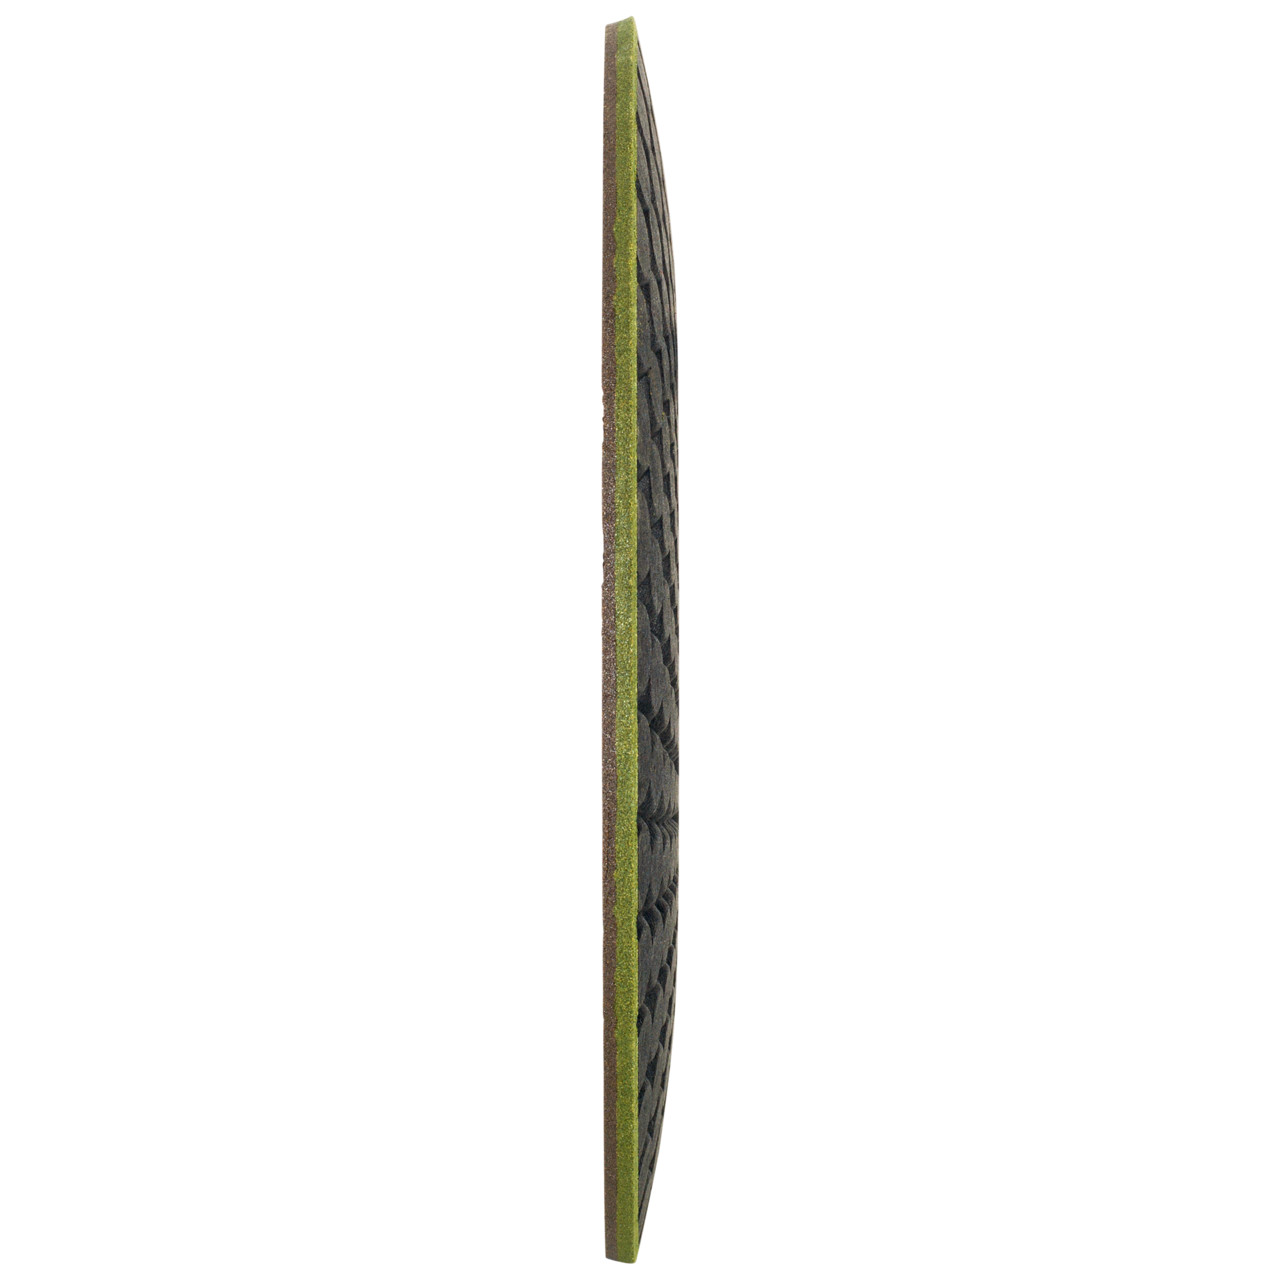 Tyrolit RONDELLER DxH 178x22,23 Para piedra, forma: 29RON (Rondeller®), Art. 908220